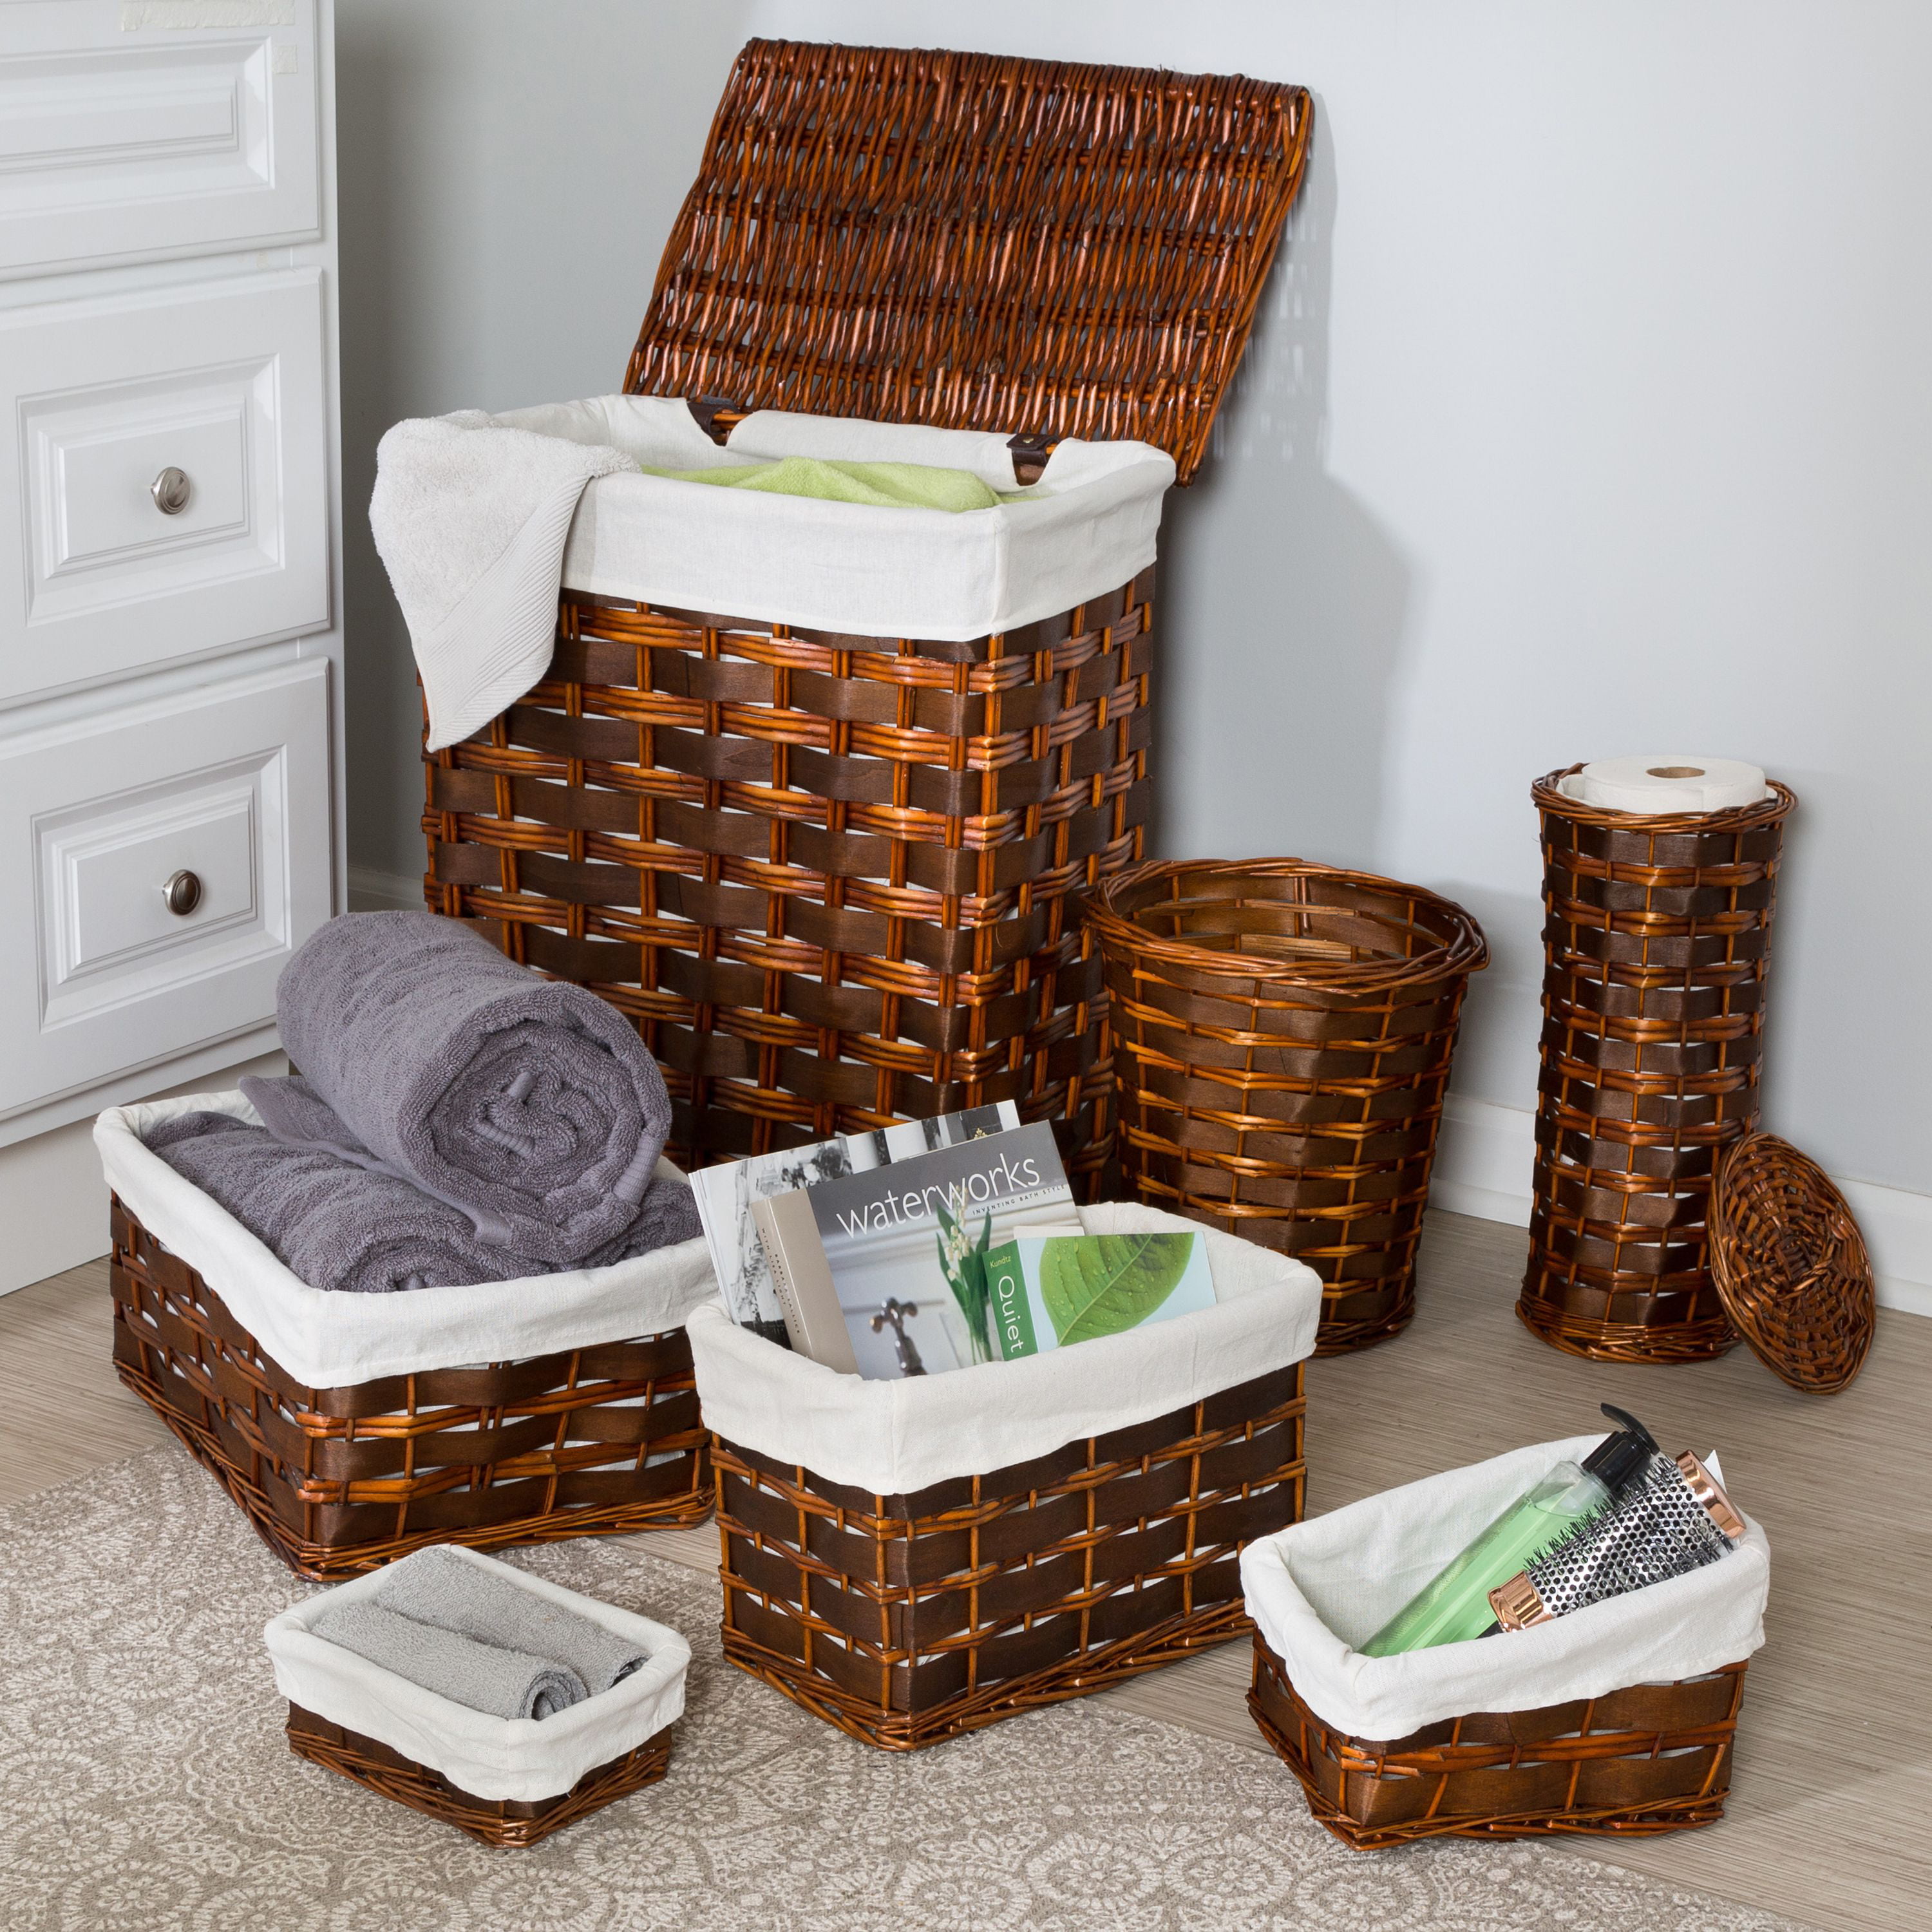 7-Piece Details about   Honey-Can-Do Wicker Hamper Kit Bath Set Laundry Storage Organizer Bins